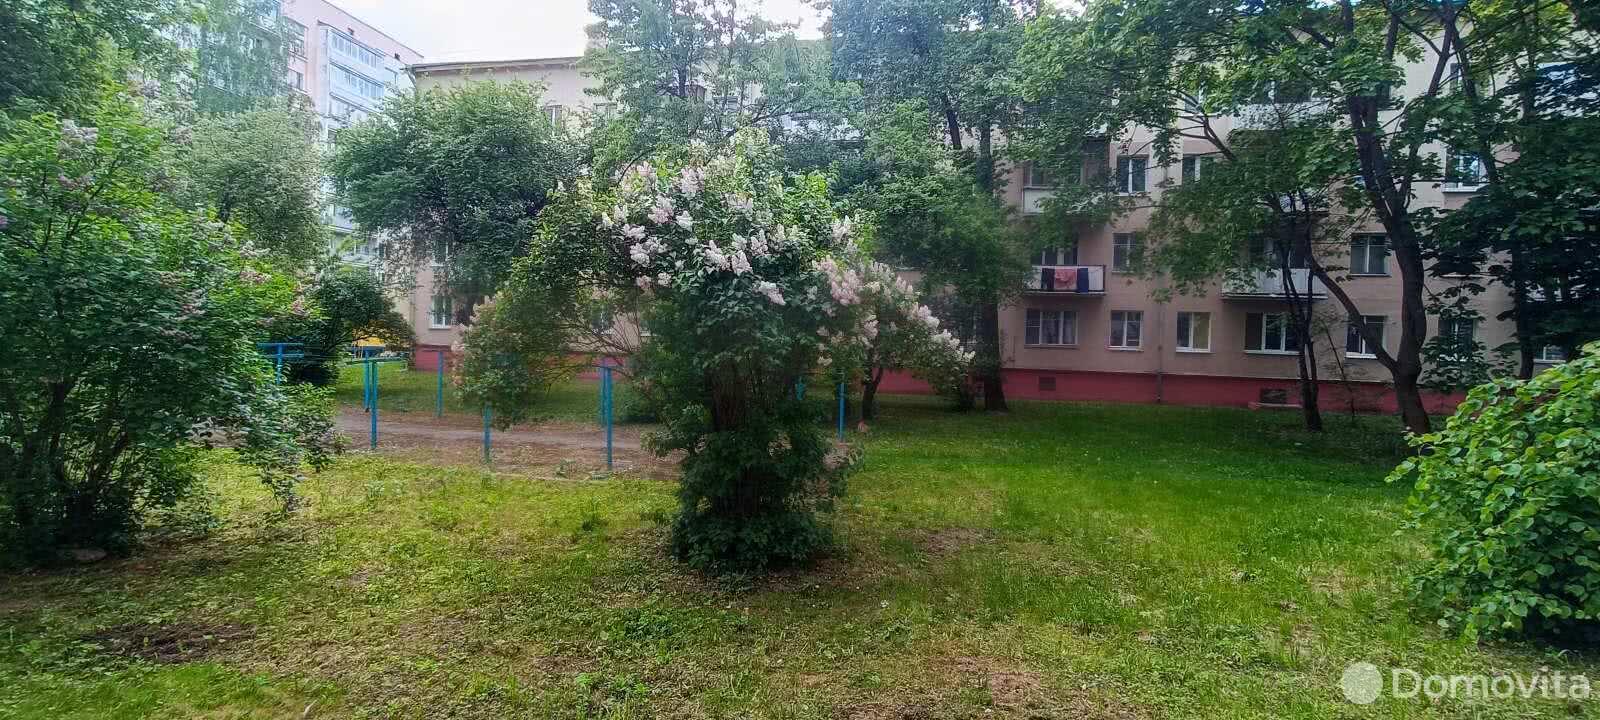 квартира, Минск, ул. Семенова, д. 26, стоимость продажи 170 750 р.